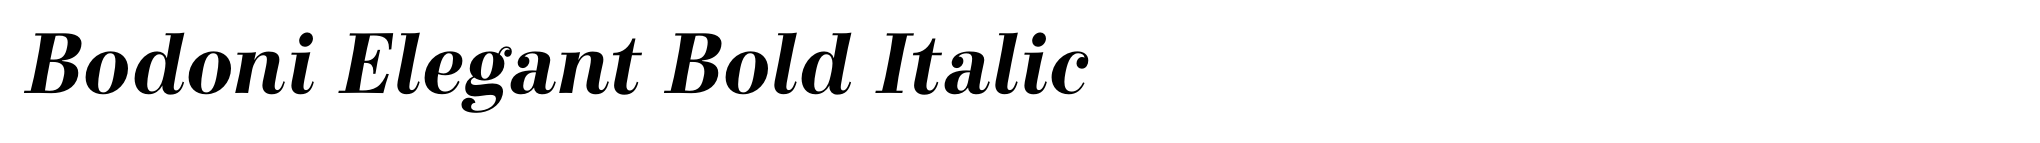 Bodoni Elegant Bold Italic image